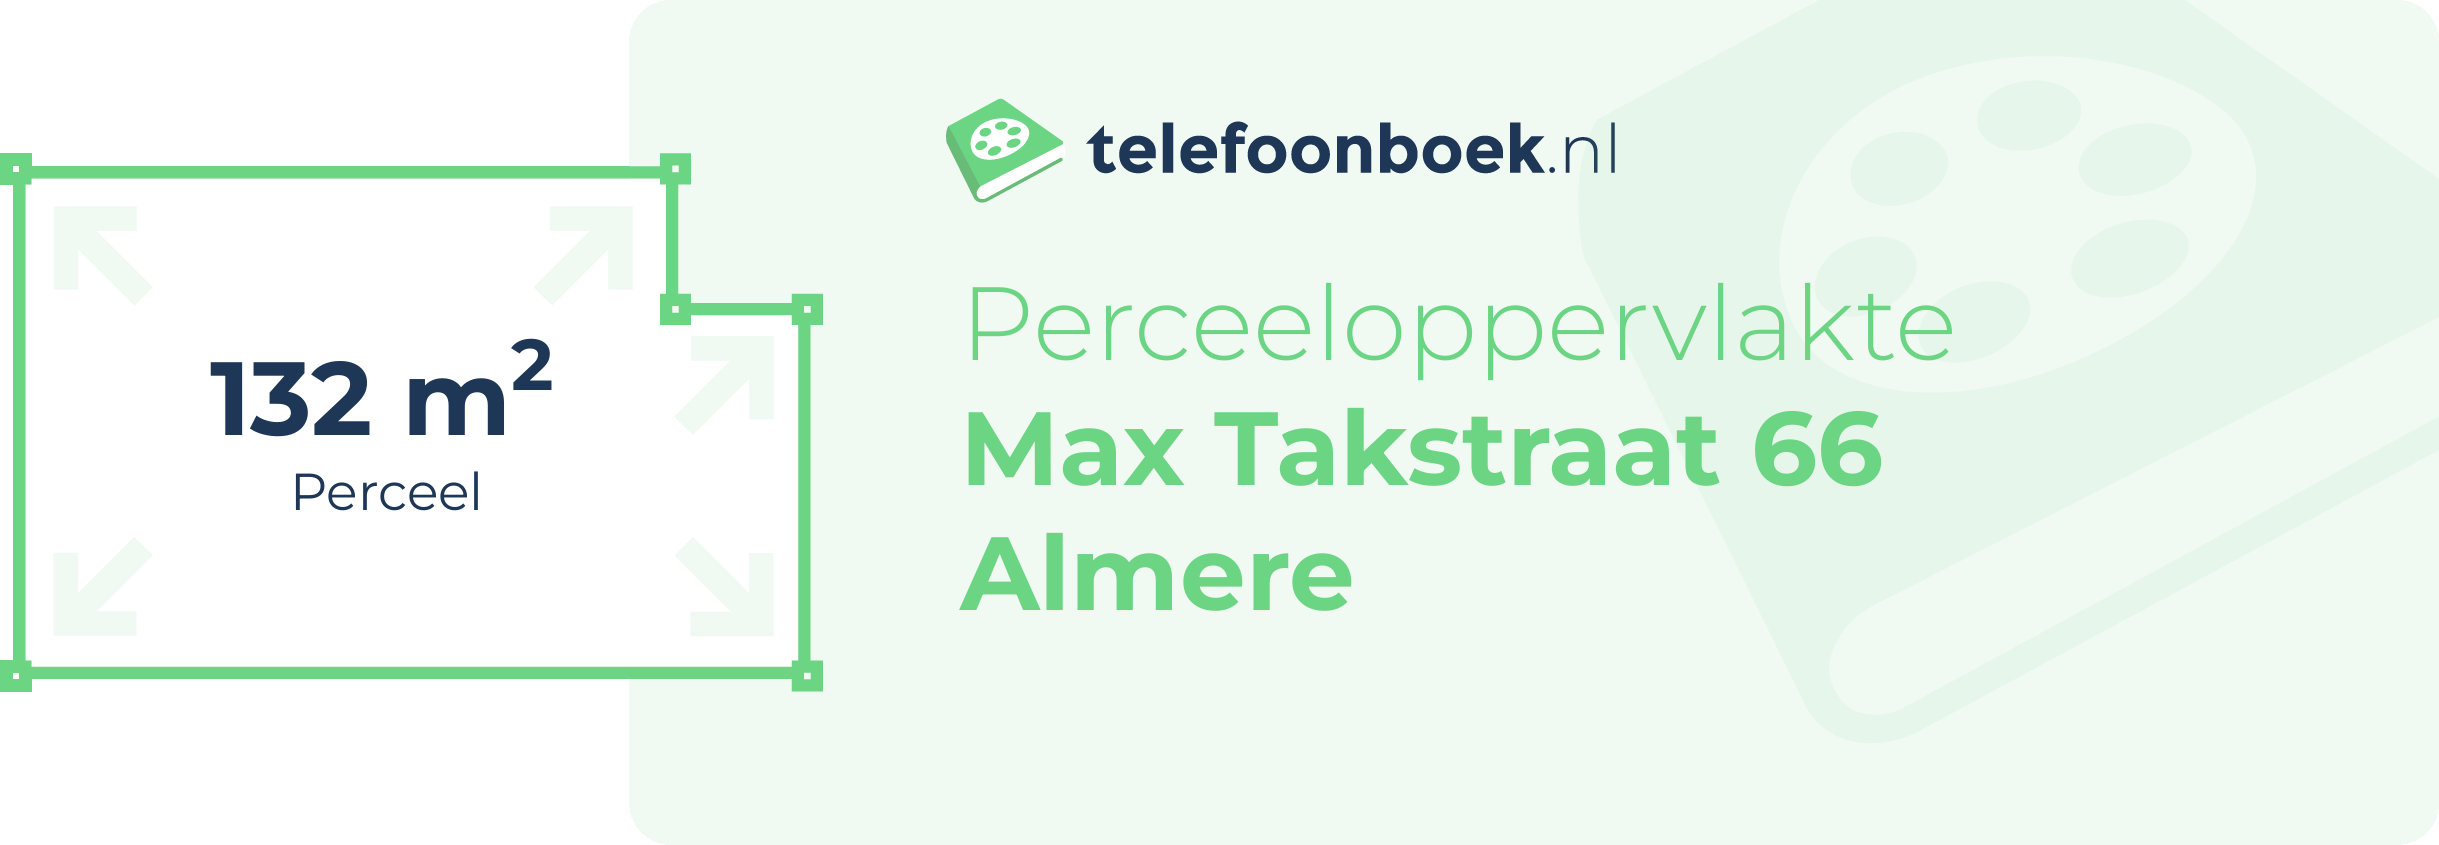 Perceeloppervlakte Max Takstraat 66 Almere